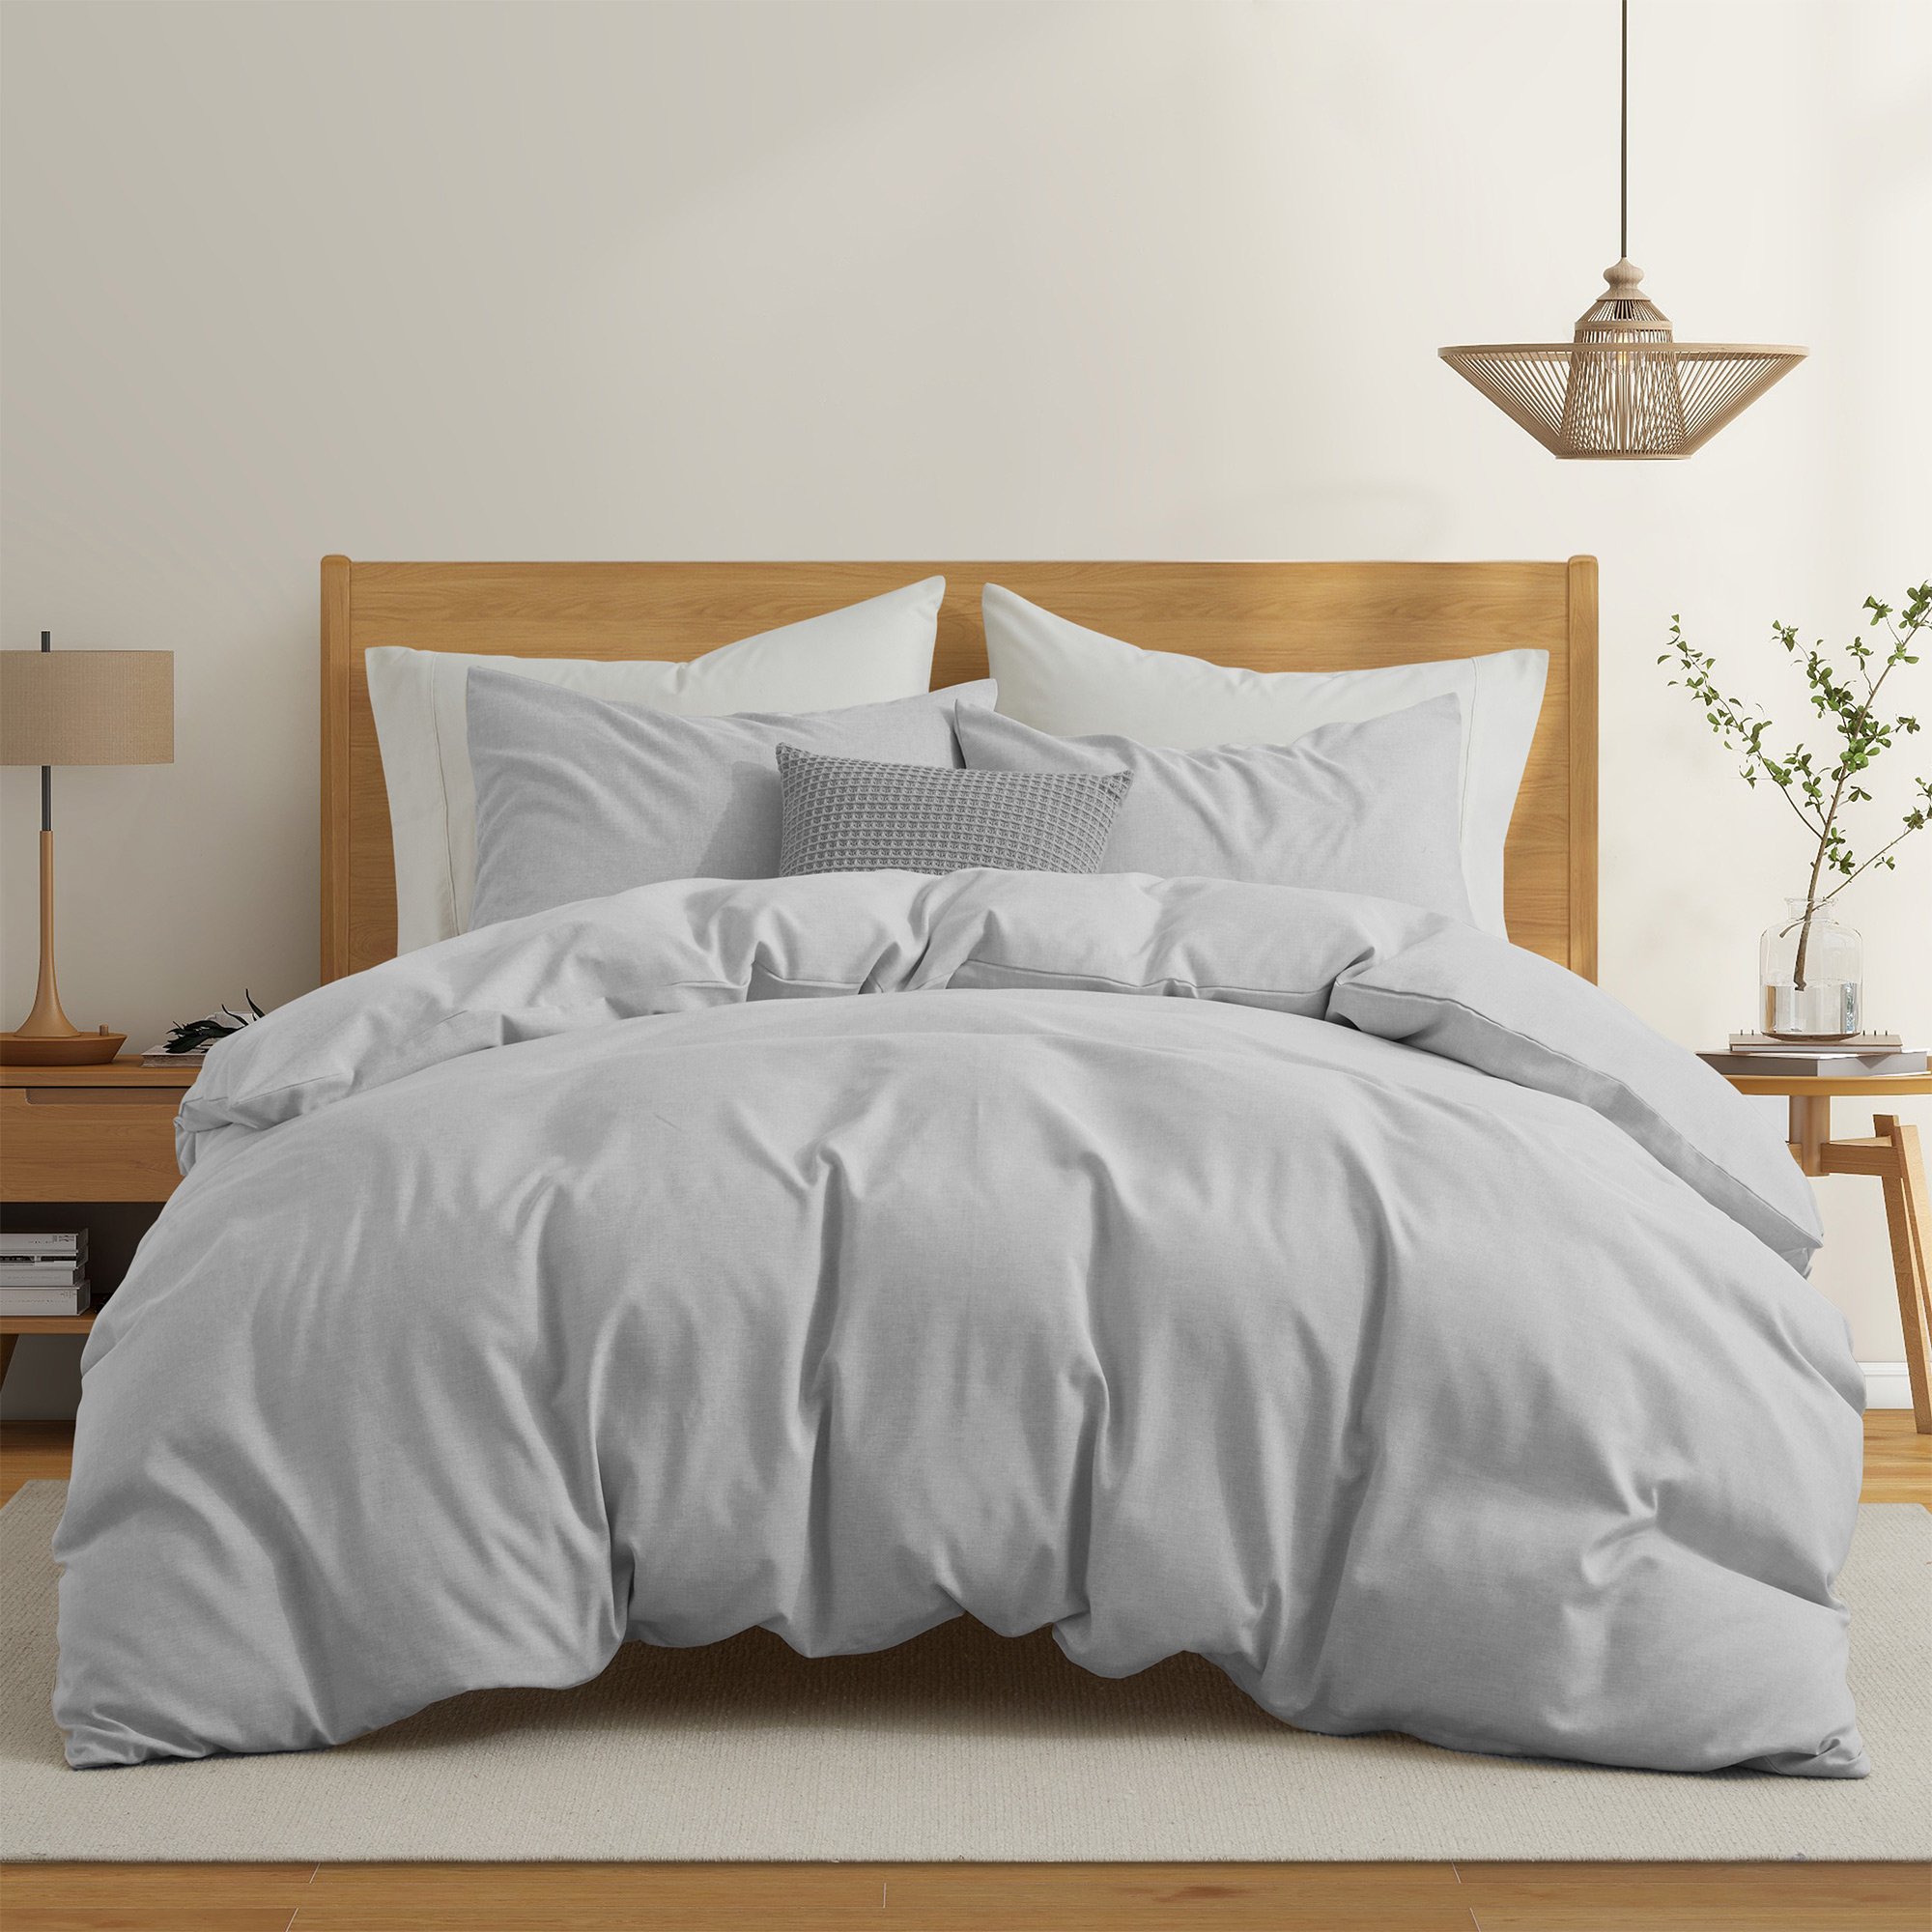 Ultimate Luxury Bedding Bundle: All Season Goose Down Comforter, 2 Pack Gusset Pillows, And Faux Linen Duvet Cover Set - Grey Bundles Option